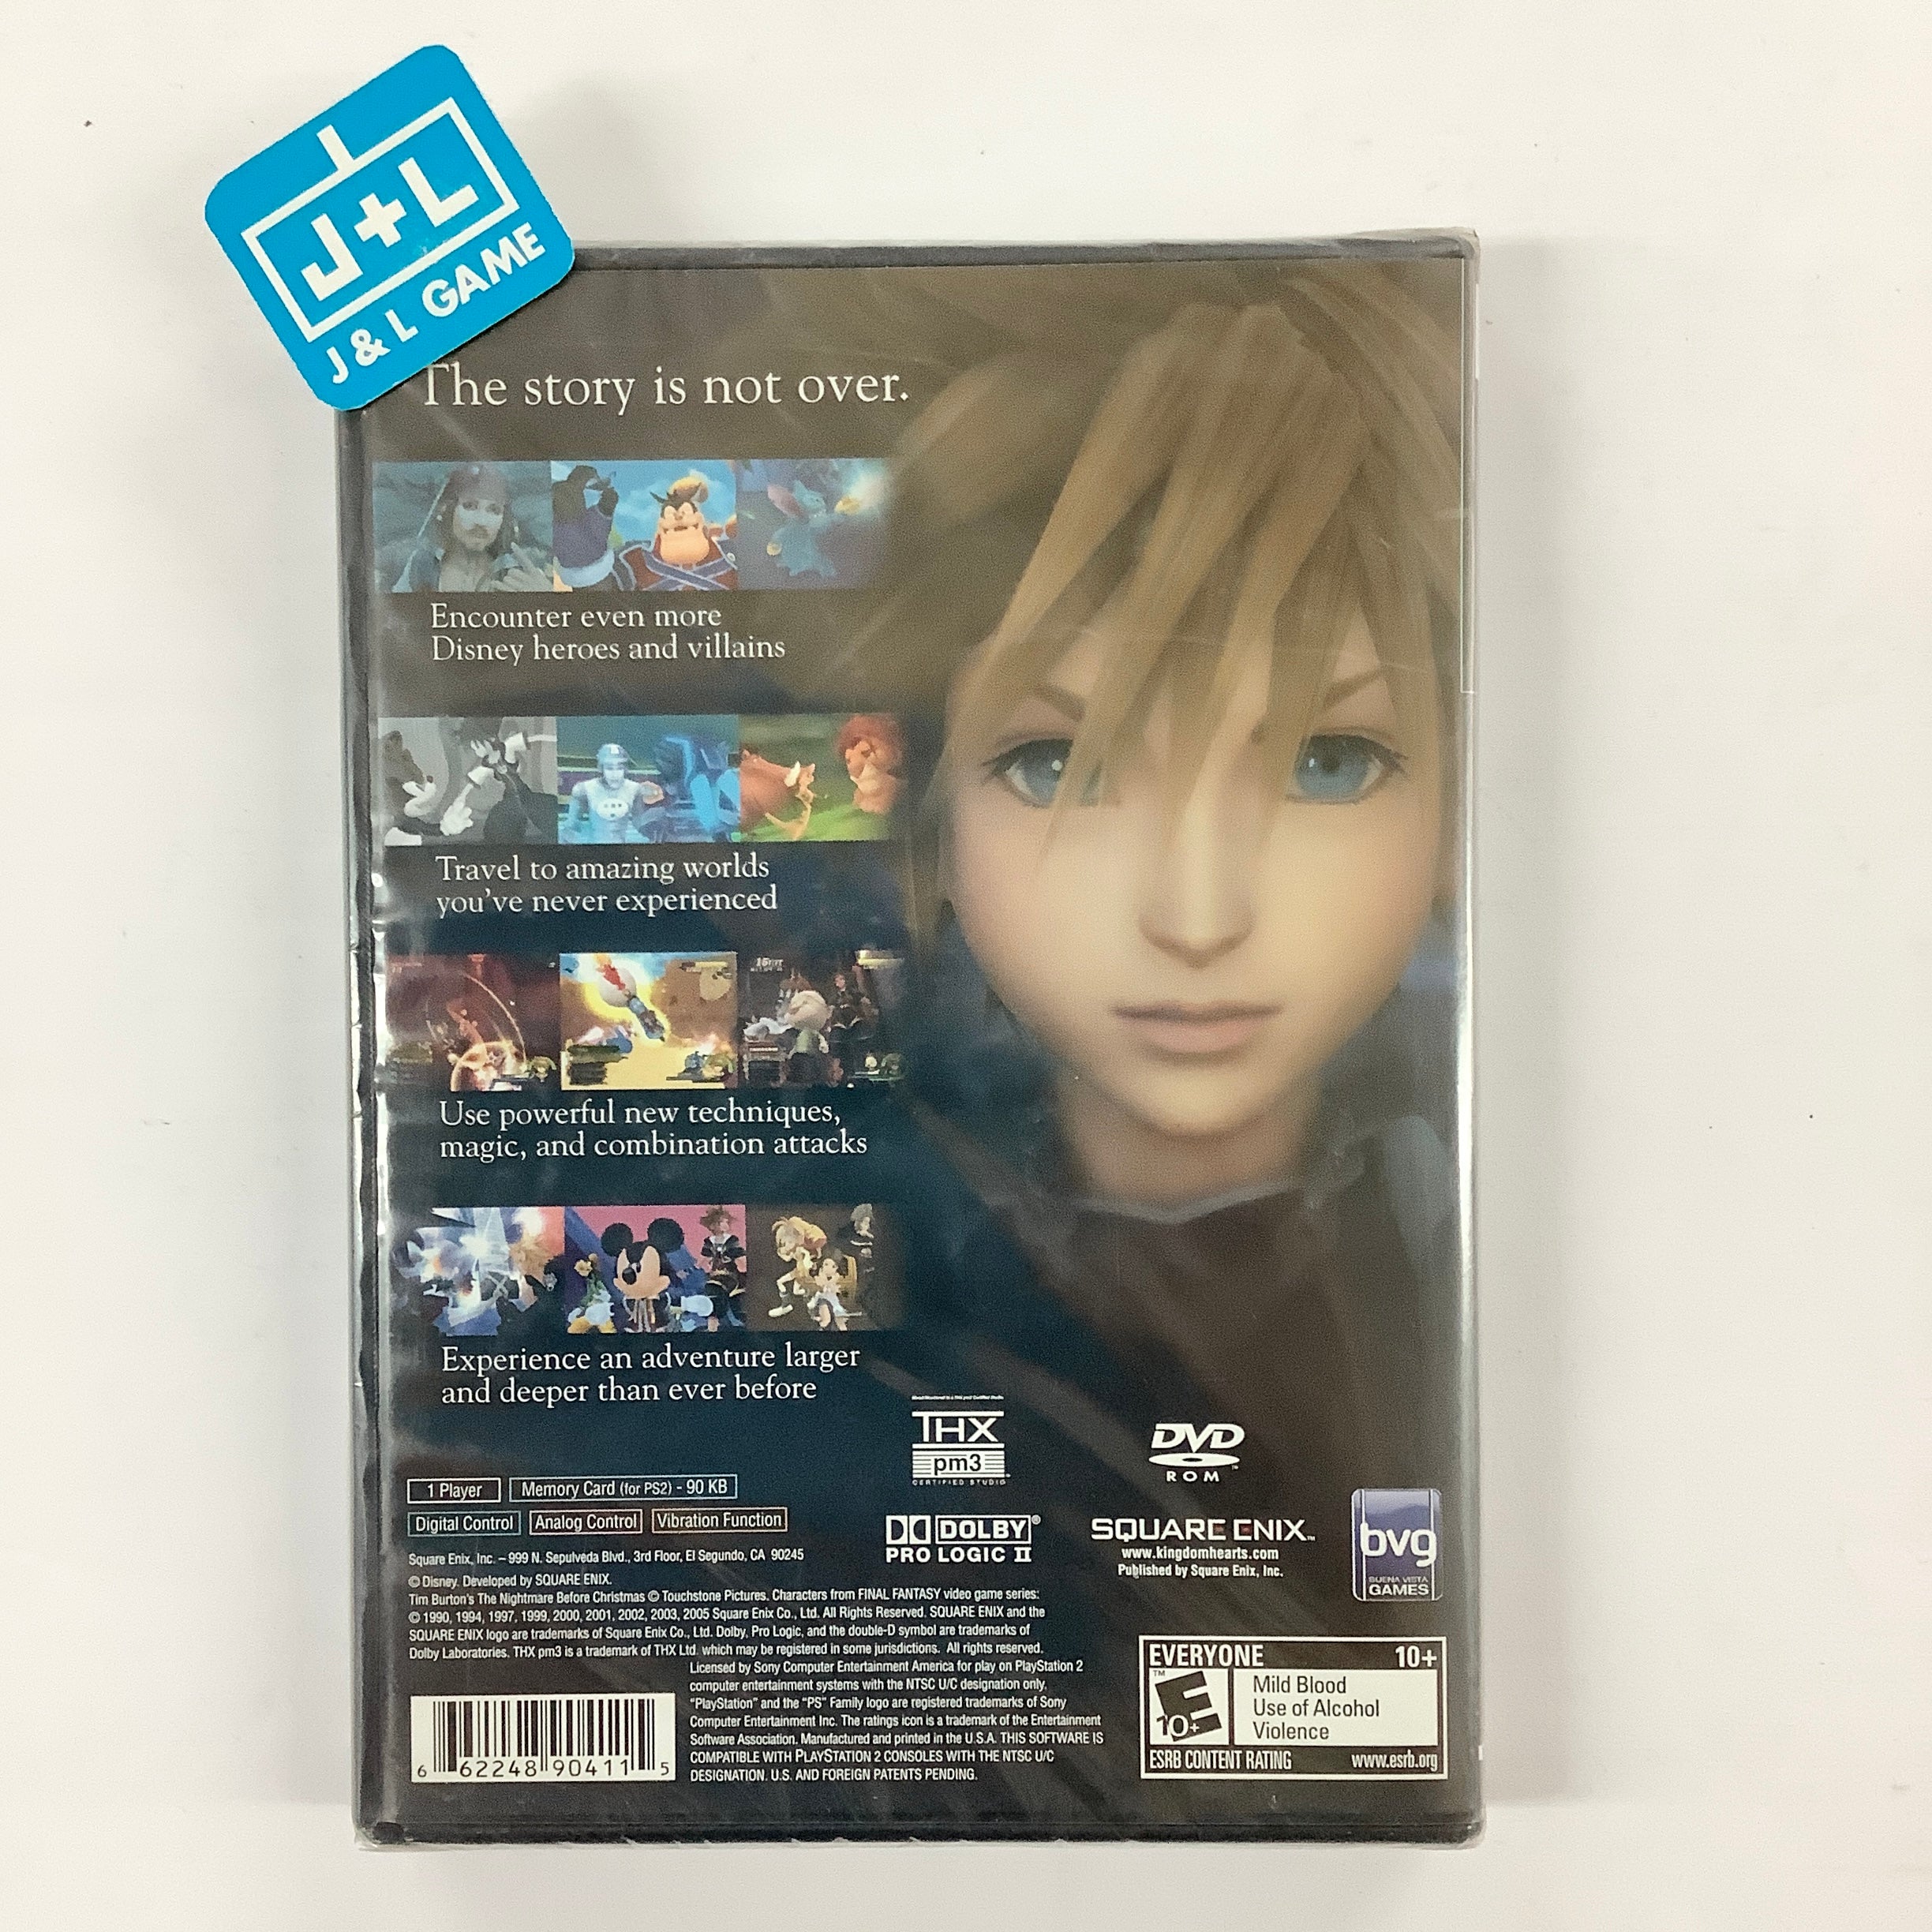 Kingdom Hearts II - (PS2) PlayStation 2 Video Games Square Enix   